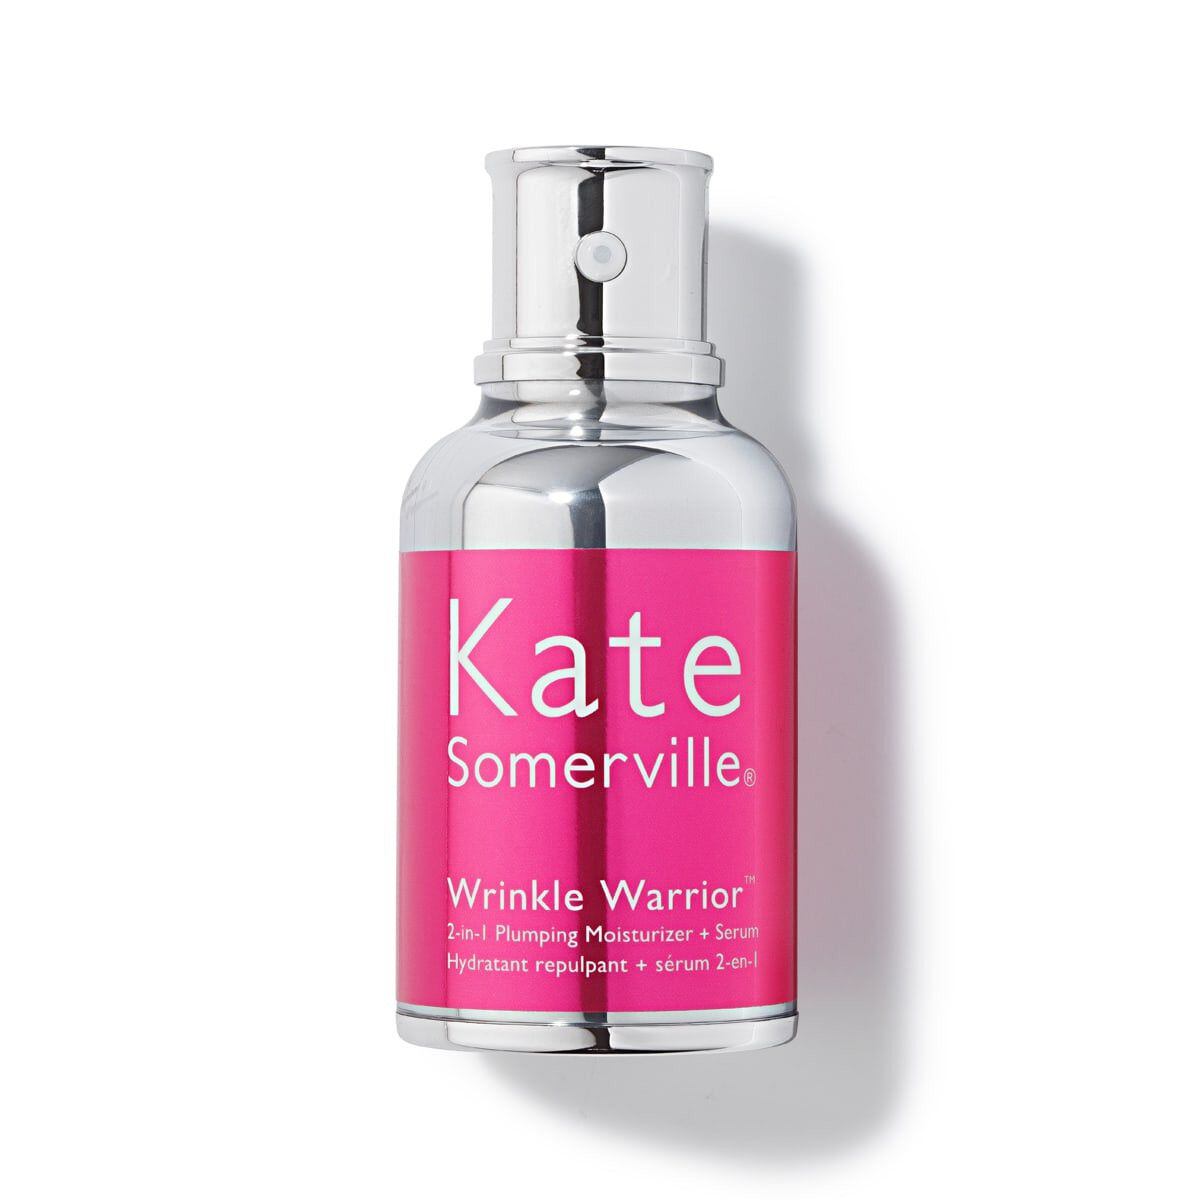 Sérum e hidratante 2 en 1 Wrinkle Warrior de Kate Somerville.